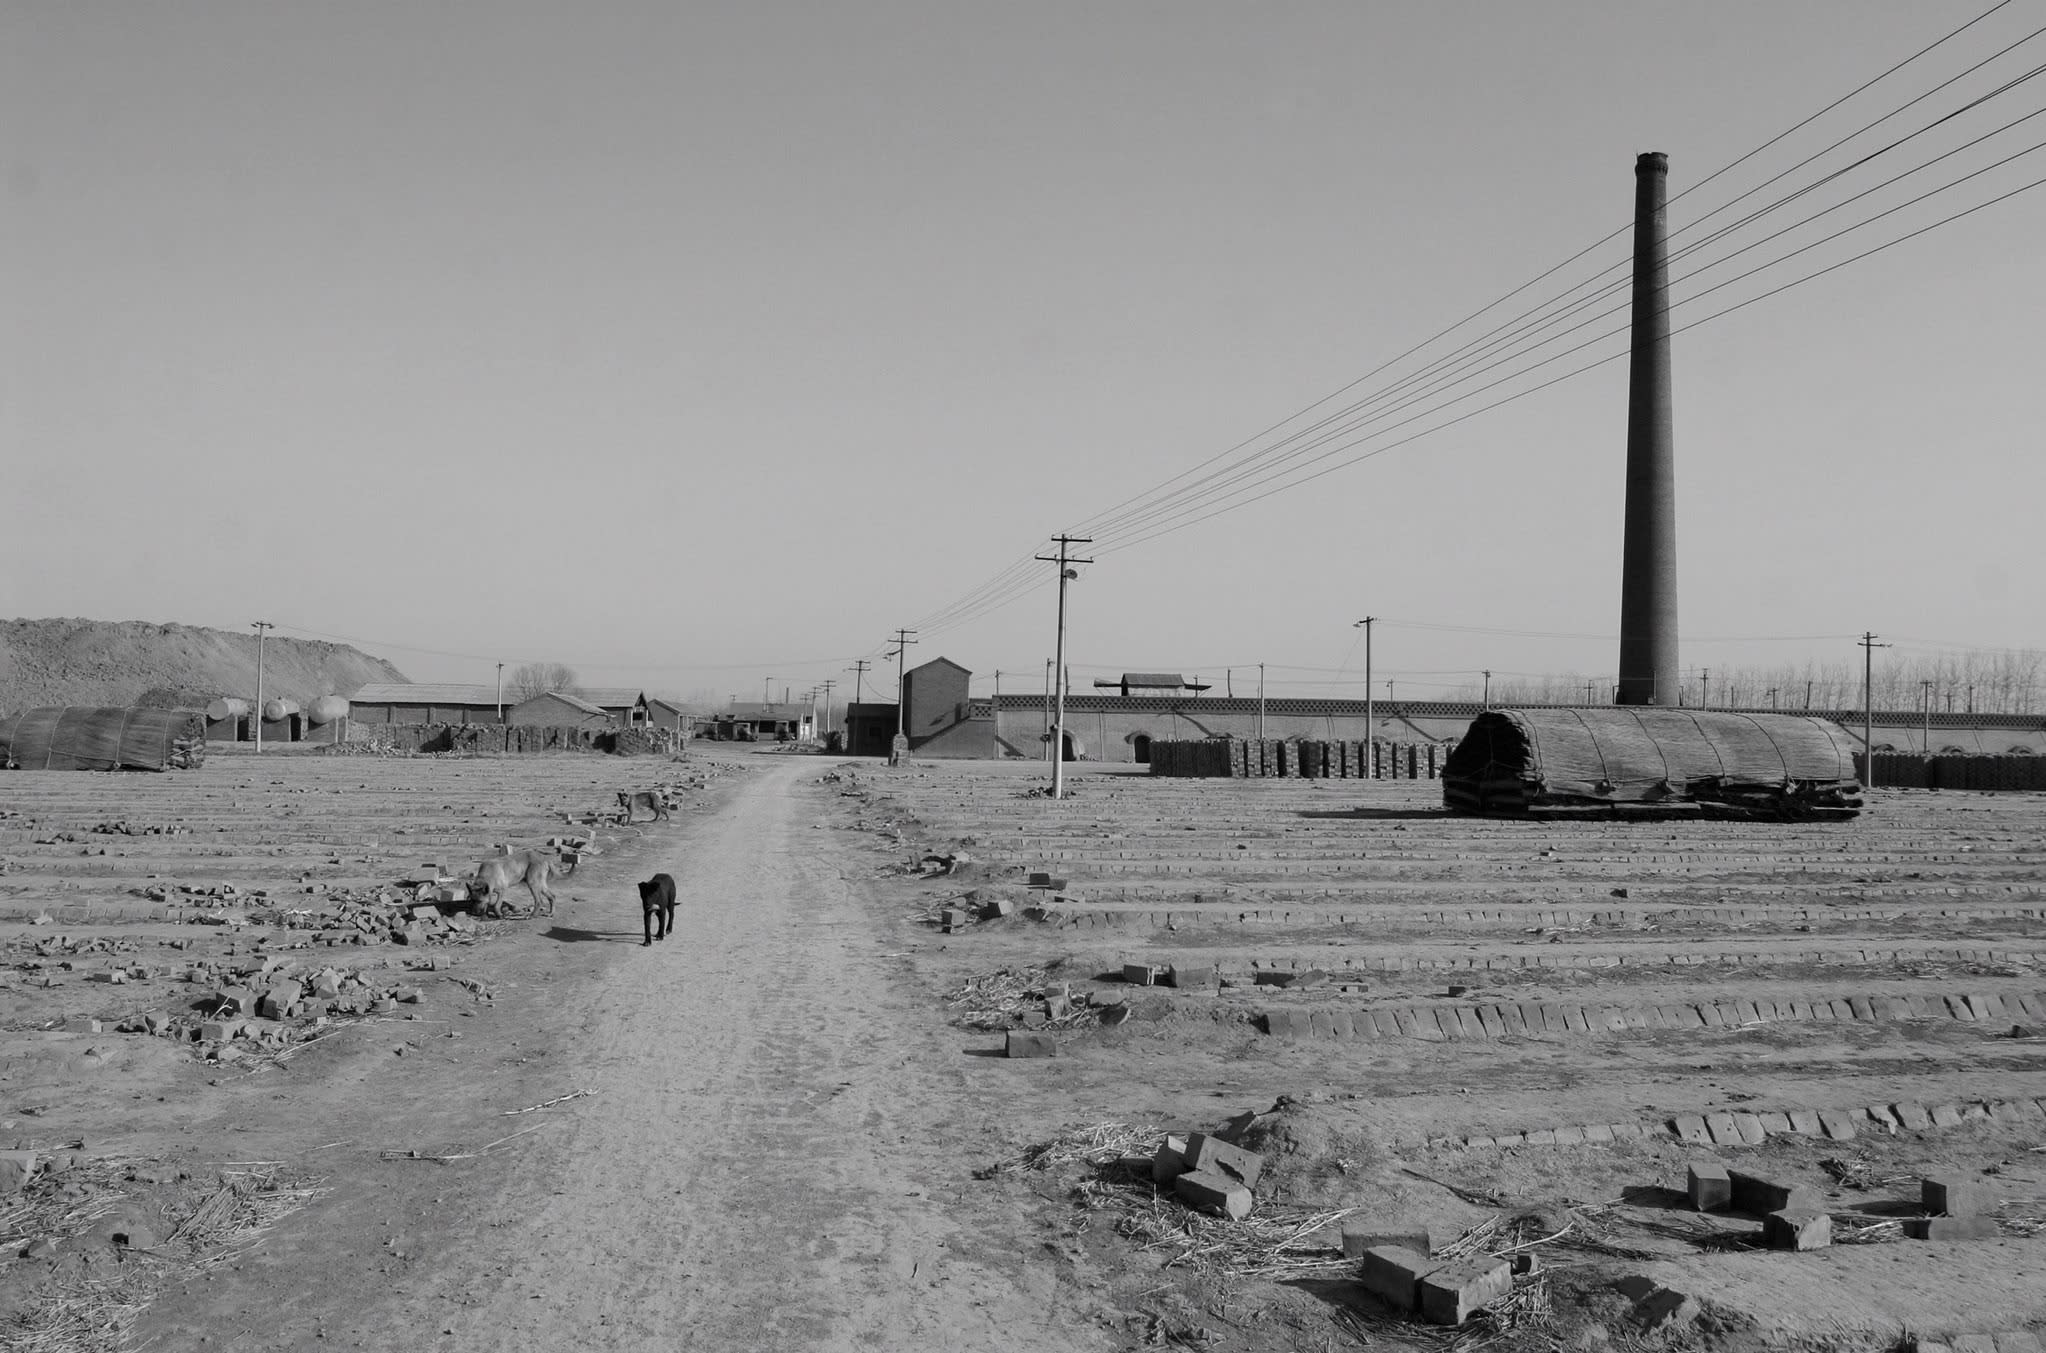 A small black dog walks along a dirt path in a barren farming landscape. 